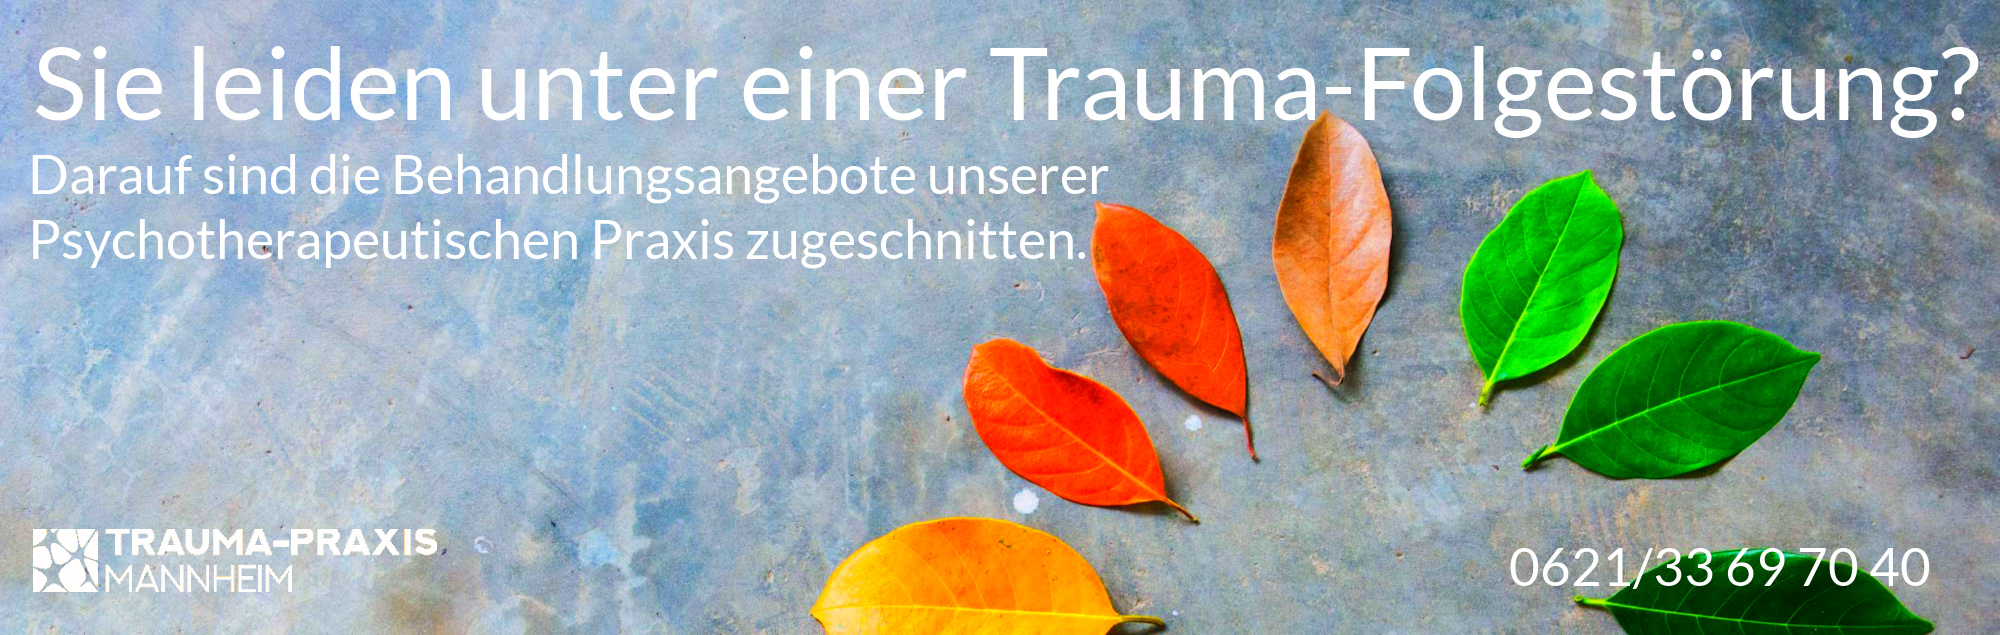 Traumatherapie in Mannheim